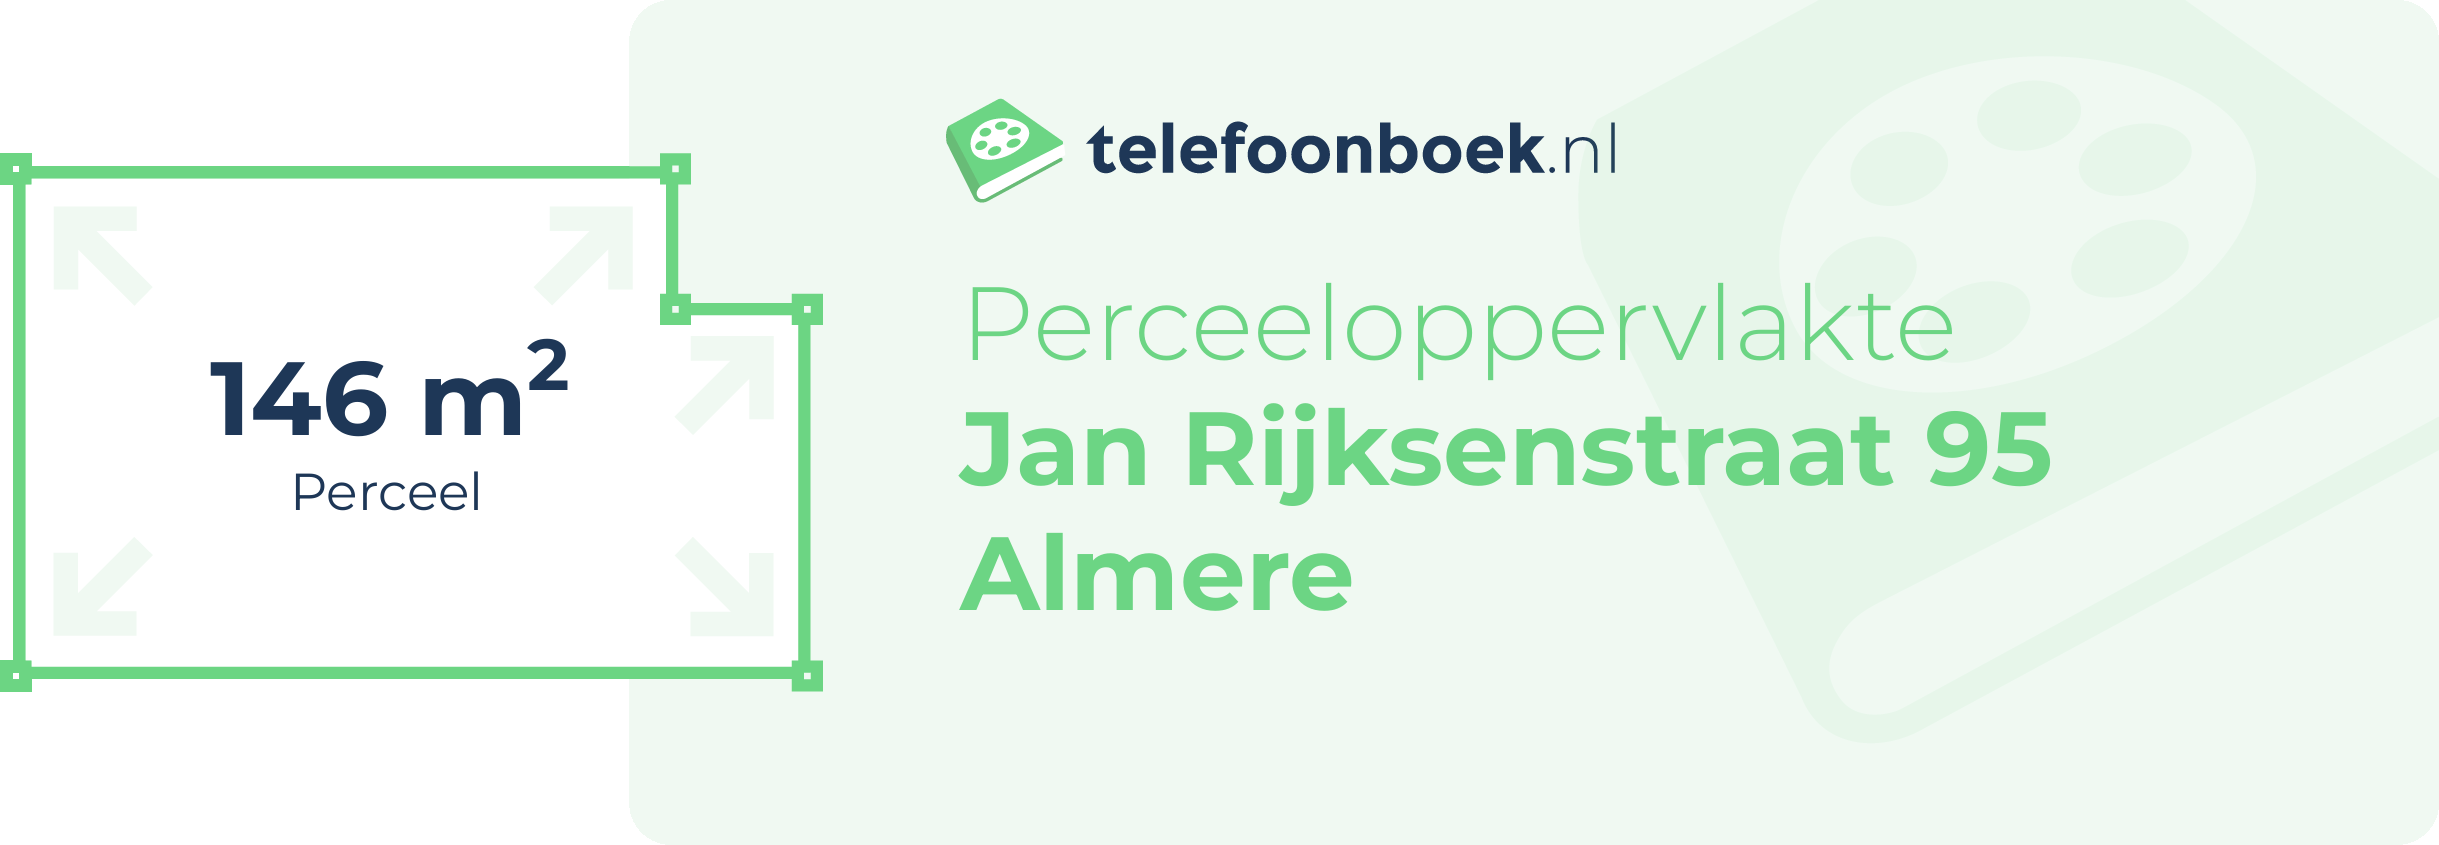 Perceeloppervlakte Jan Rijksenstraat 95 Almere